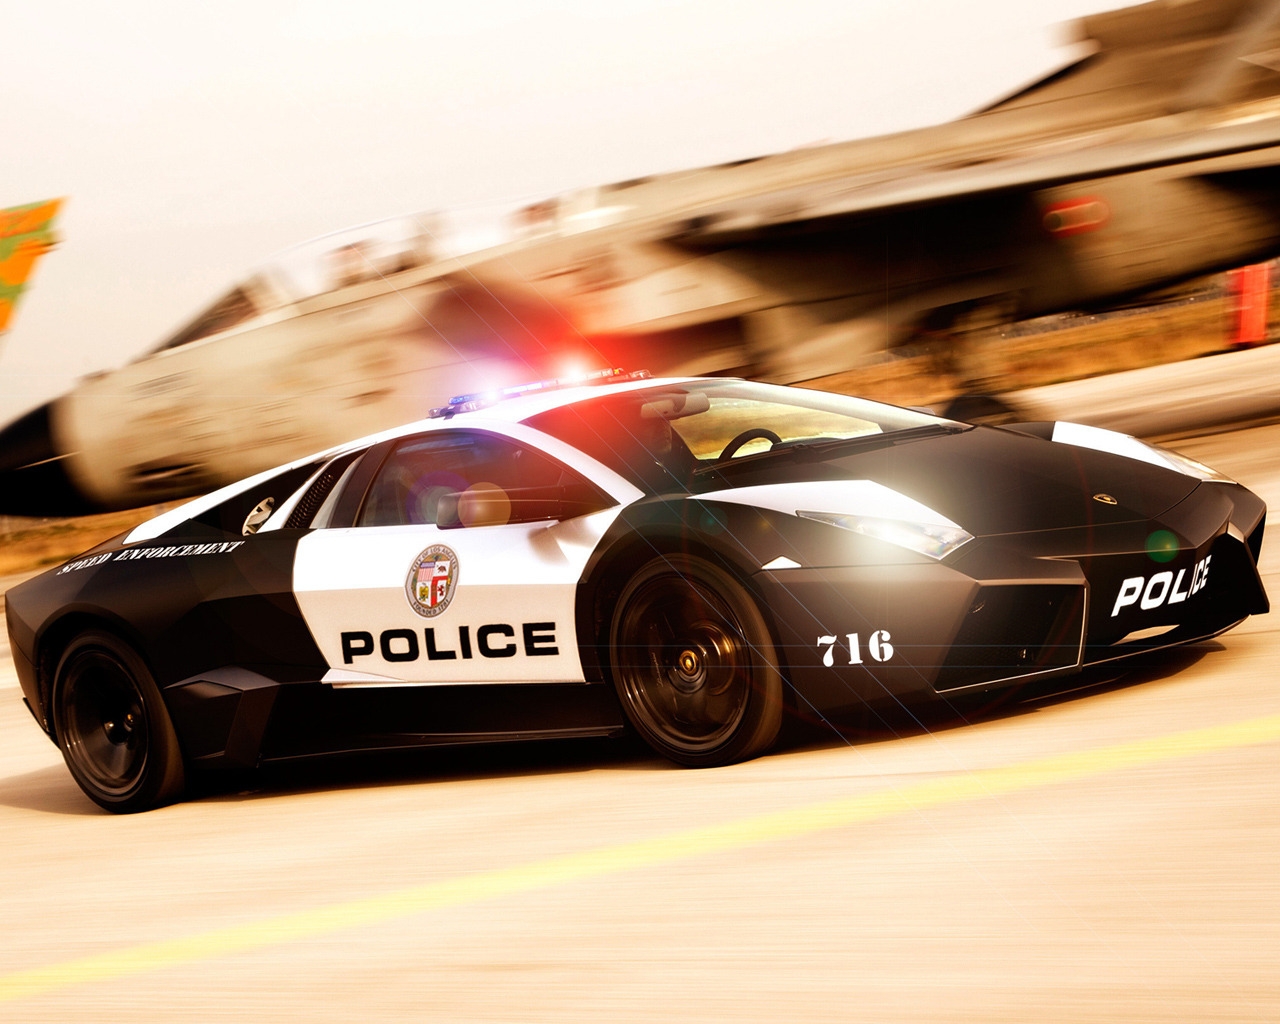 Lamborghini Police Car NFS for 1280 x 1024 resolution